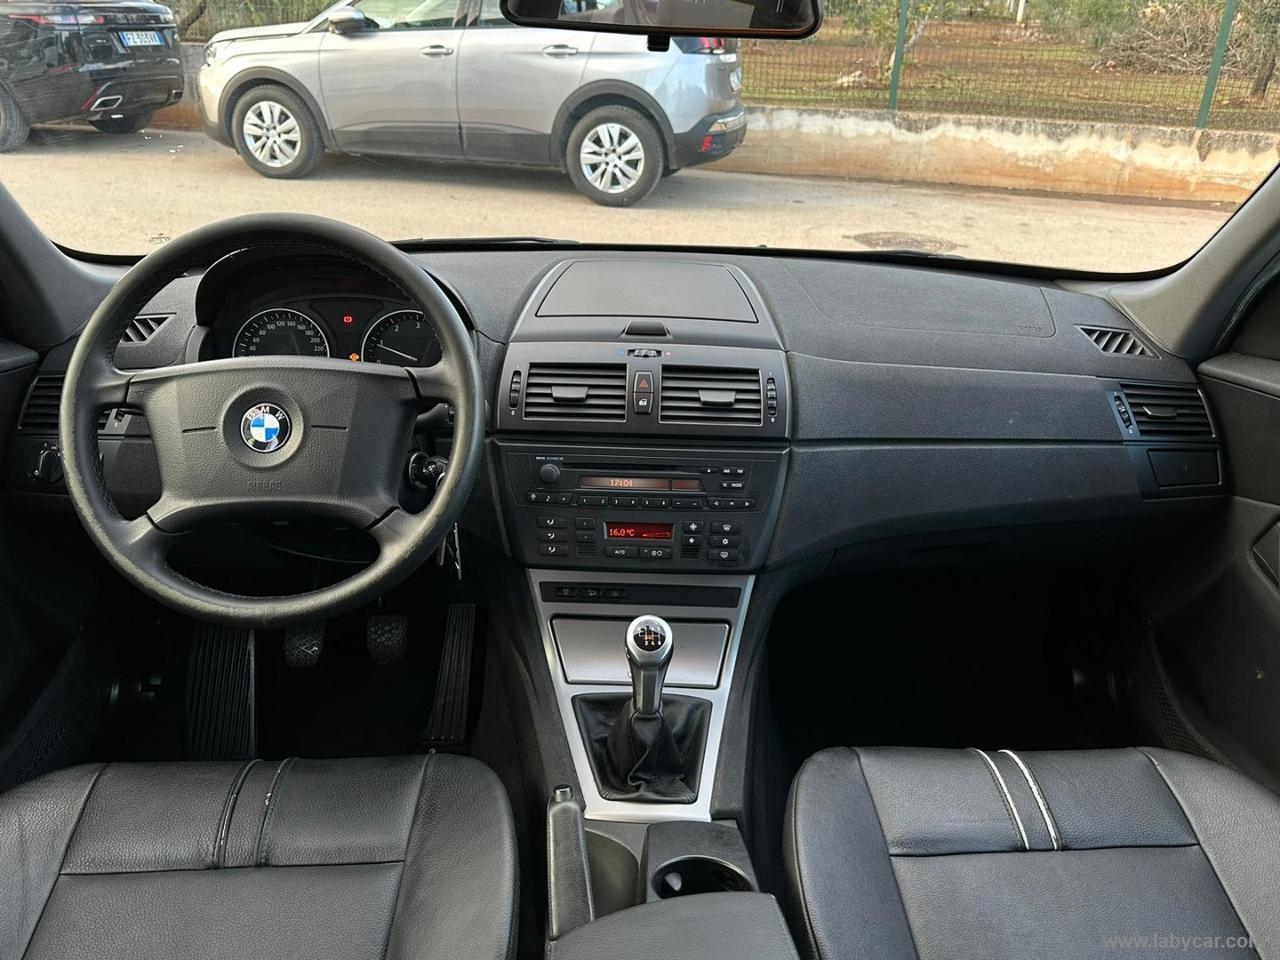 BMW X3 2.0d Attiva